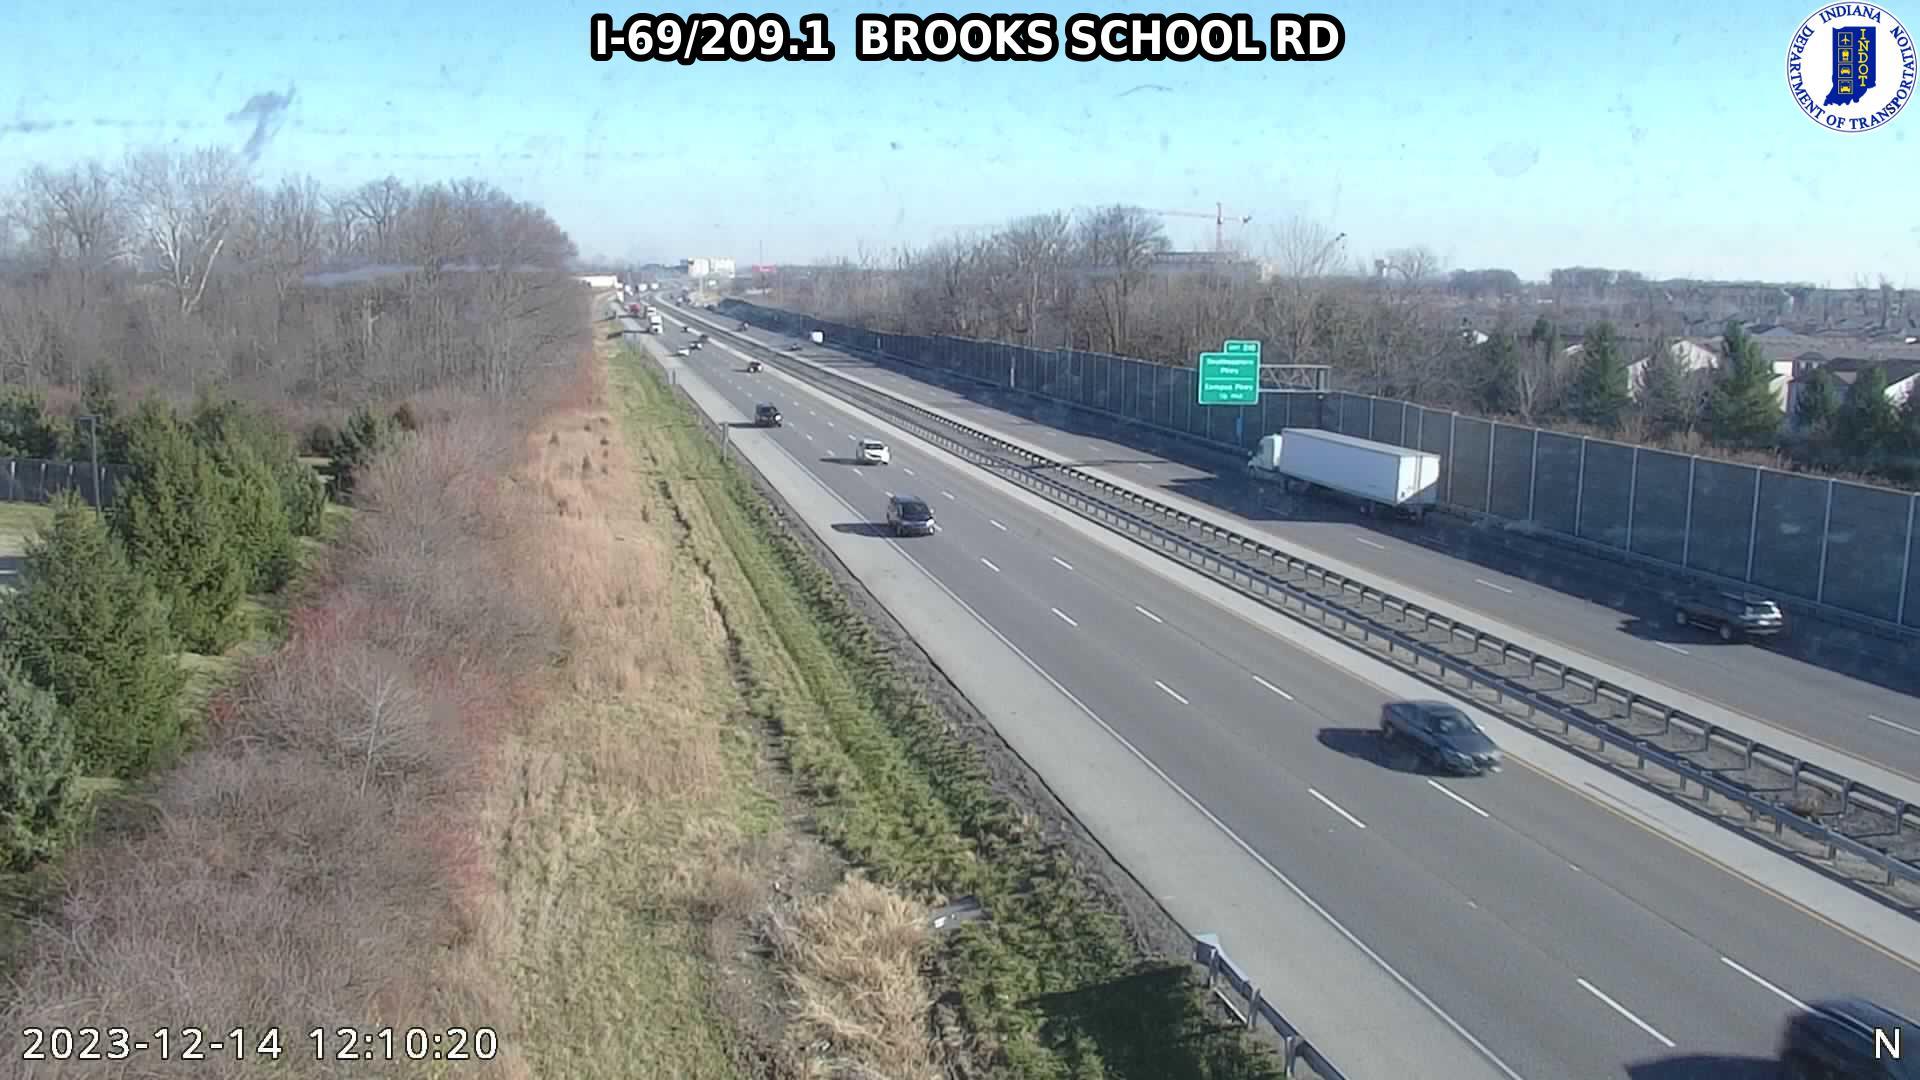 Traffic Cam Fishers: I-69: I-69/209.1 BROOKS SCHOOL RD Player